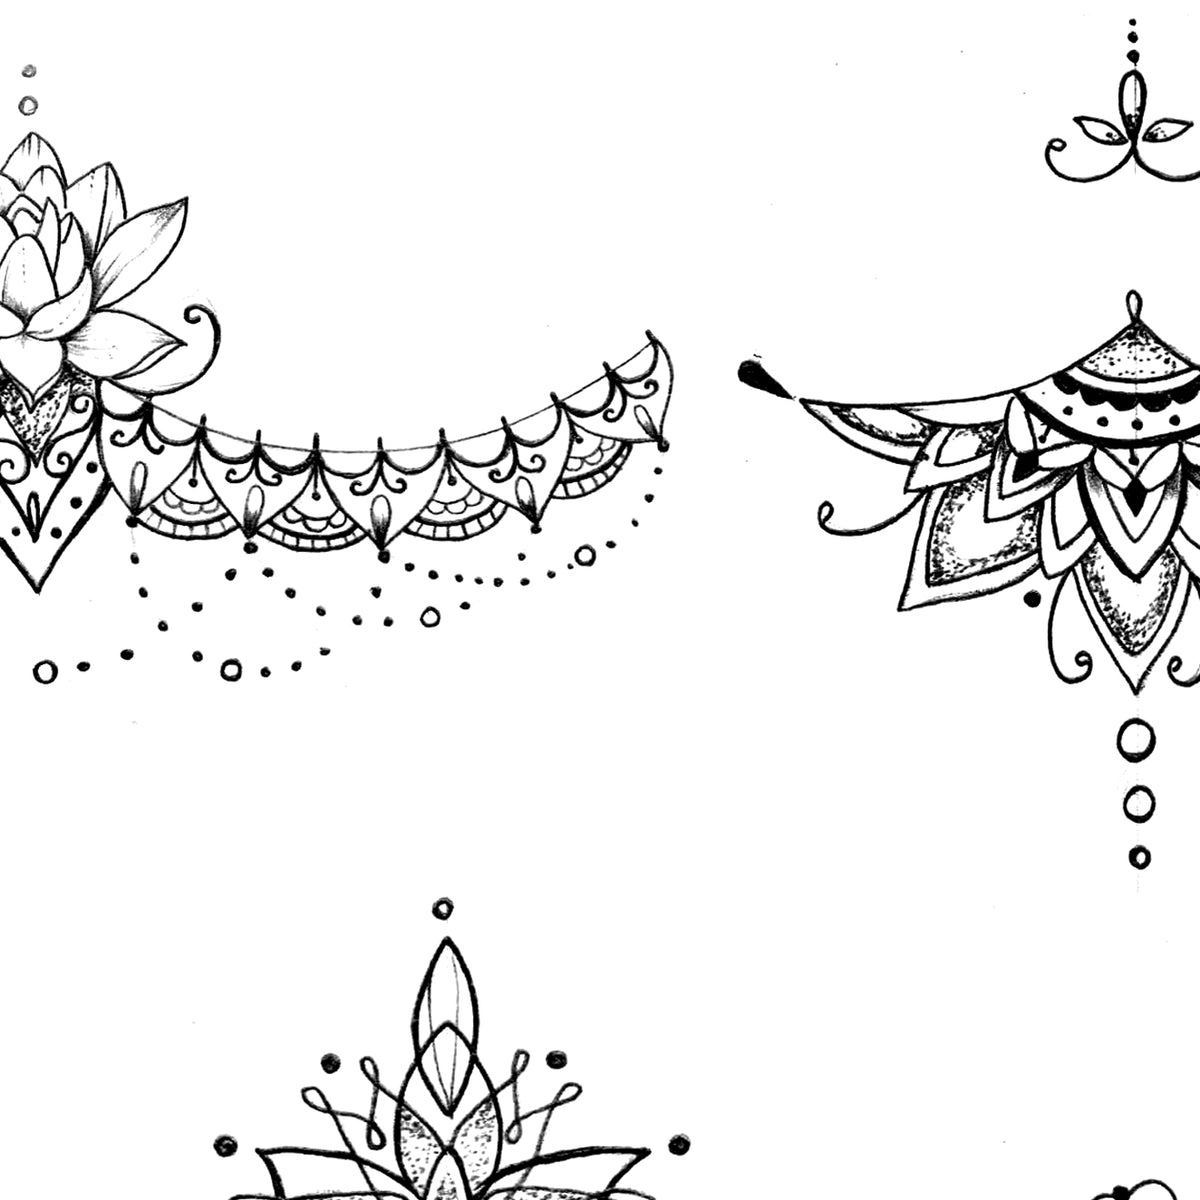 Mandala and lace under boob tattoo designs – TattooDesignStock